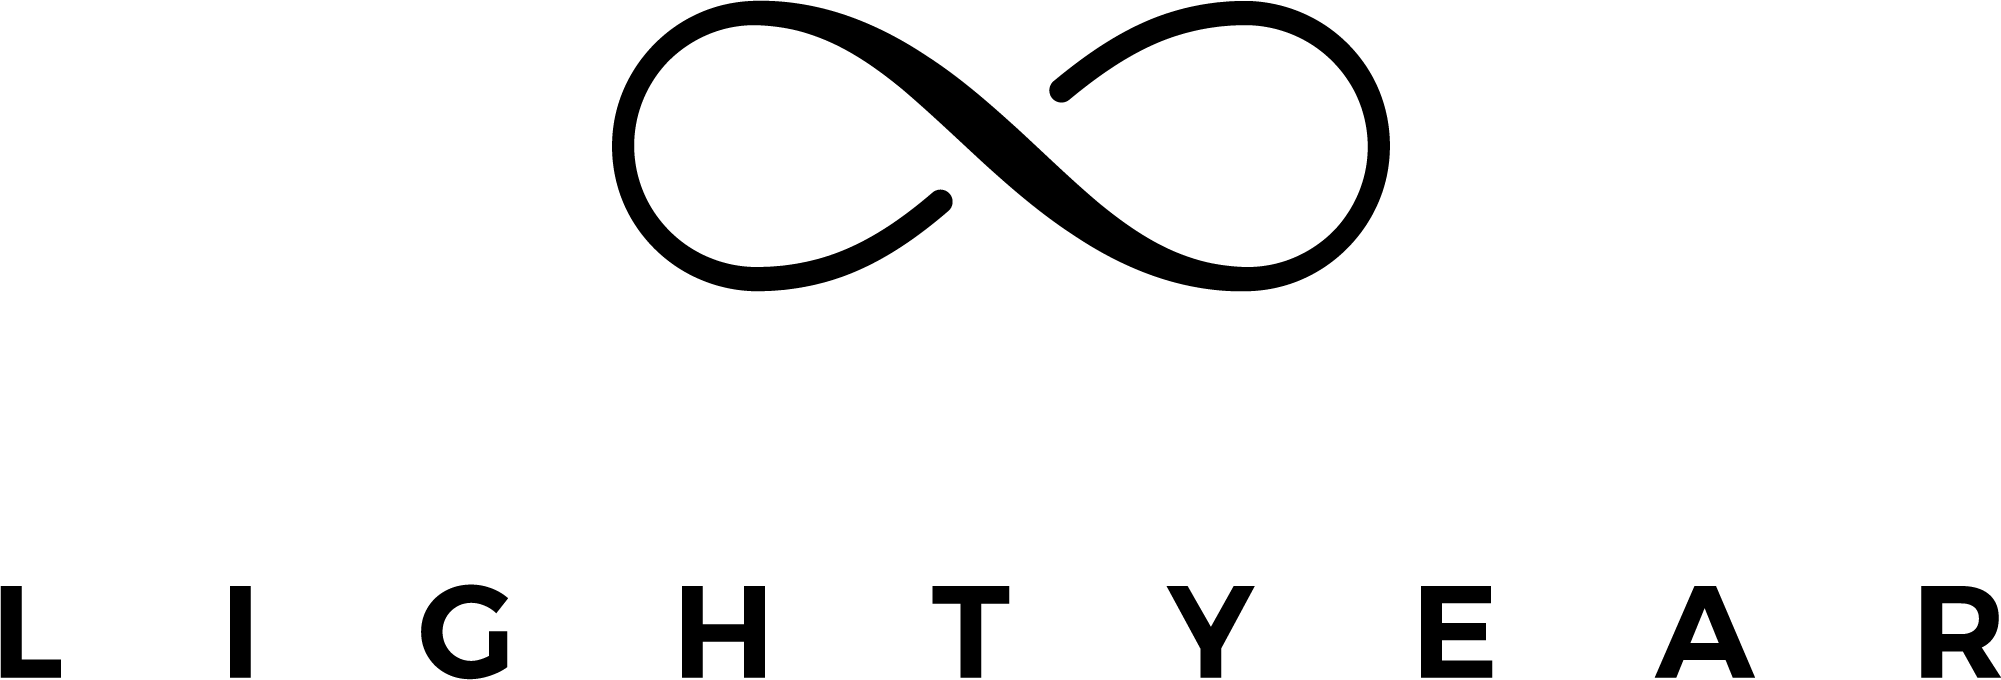 Lightyear Logo - Lightyear - Member of the World Alliance